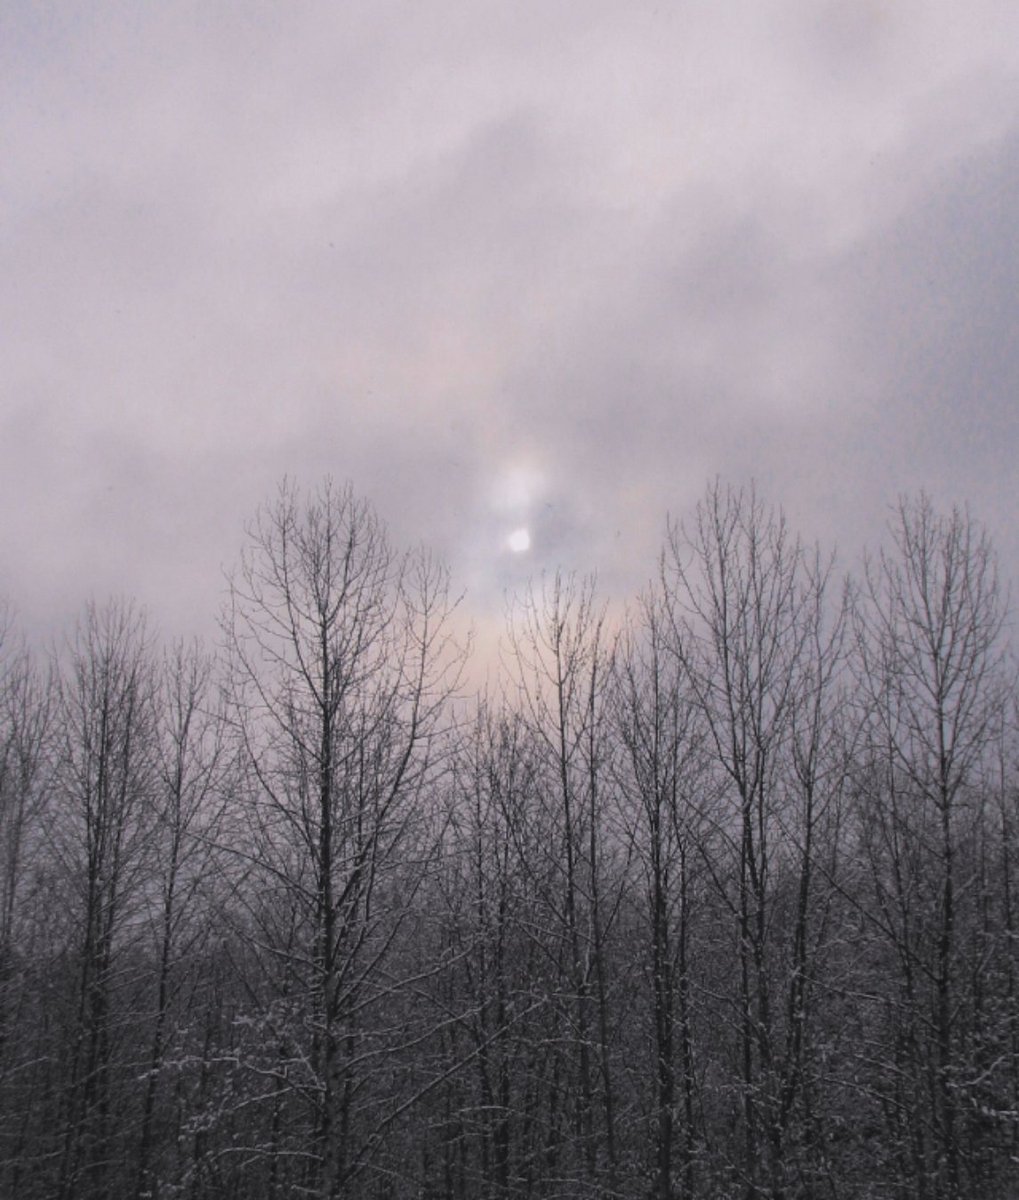 RT @mcmulle1: Sunrise this morning in Aurora Minnesota!
#sunrise #weather #morning #sunrisephotography #nature #NatureBeauty #naturelover #photographylovers #photograph #photographer #photography #canonphotography https://t.co/7c9aiSof4Z